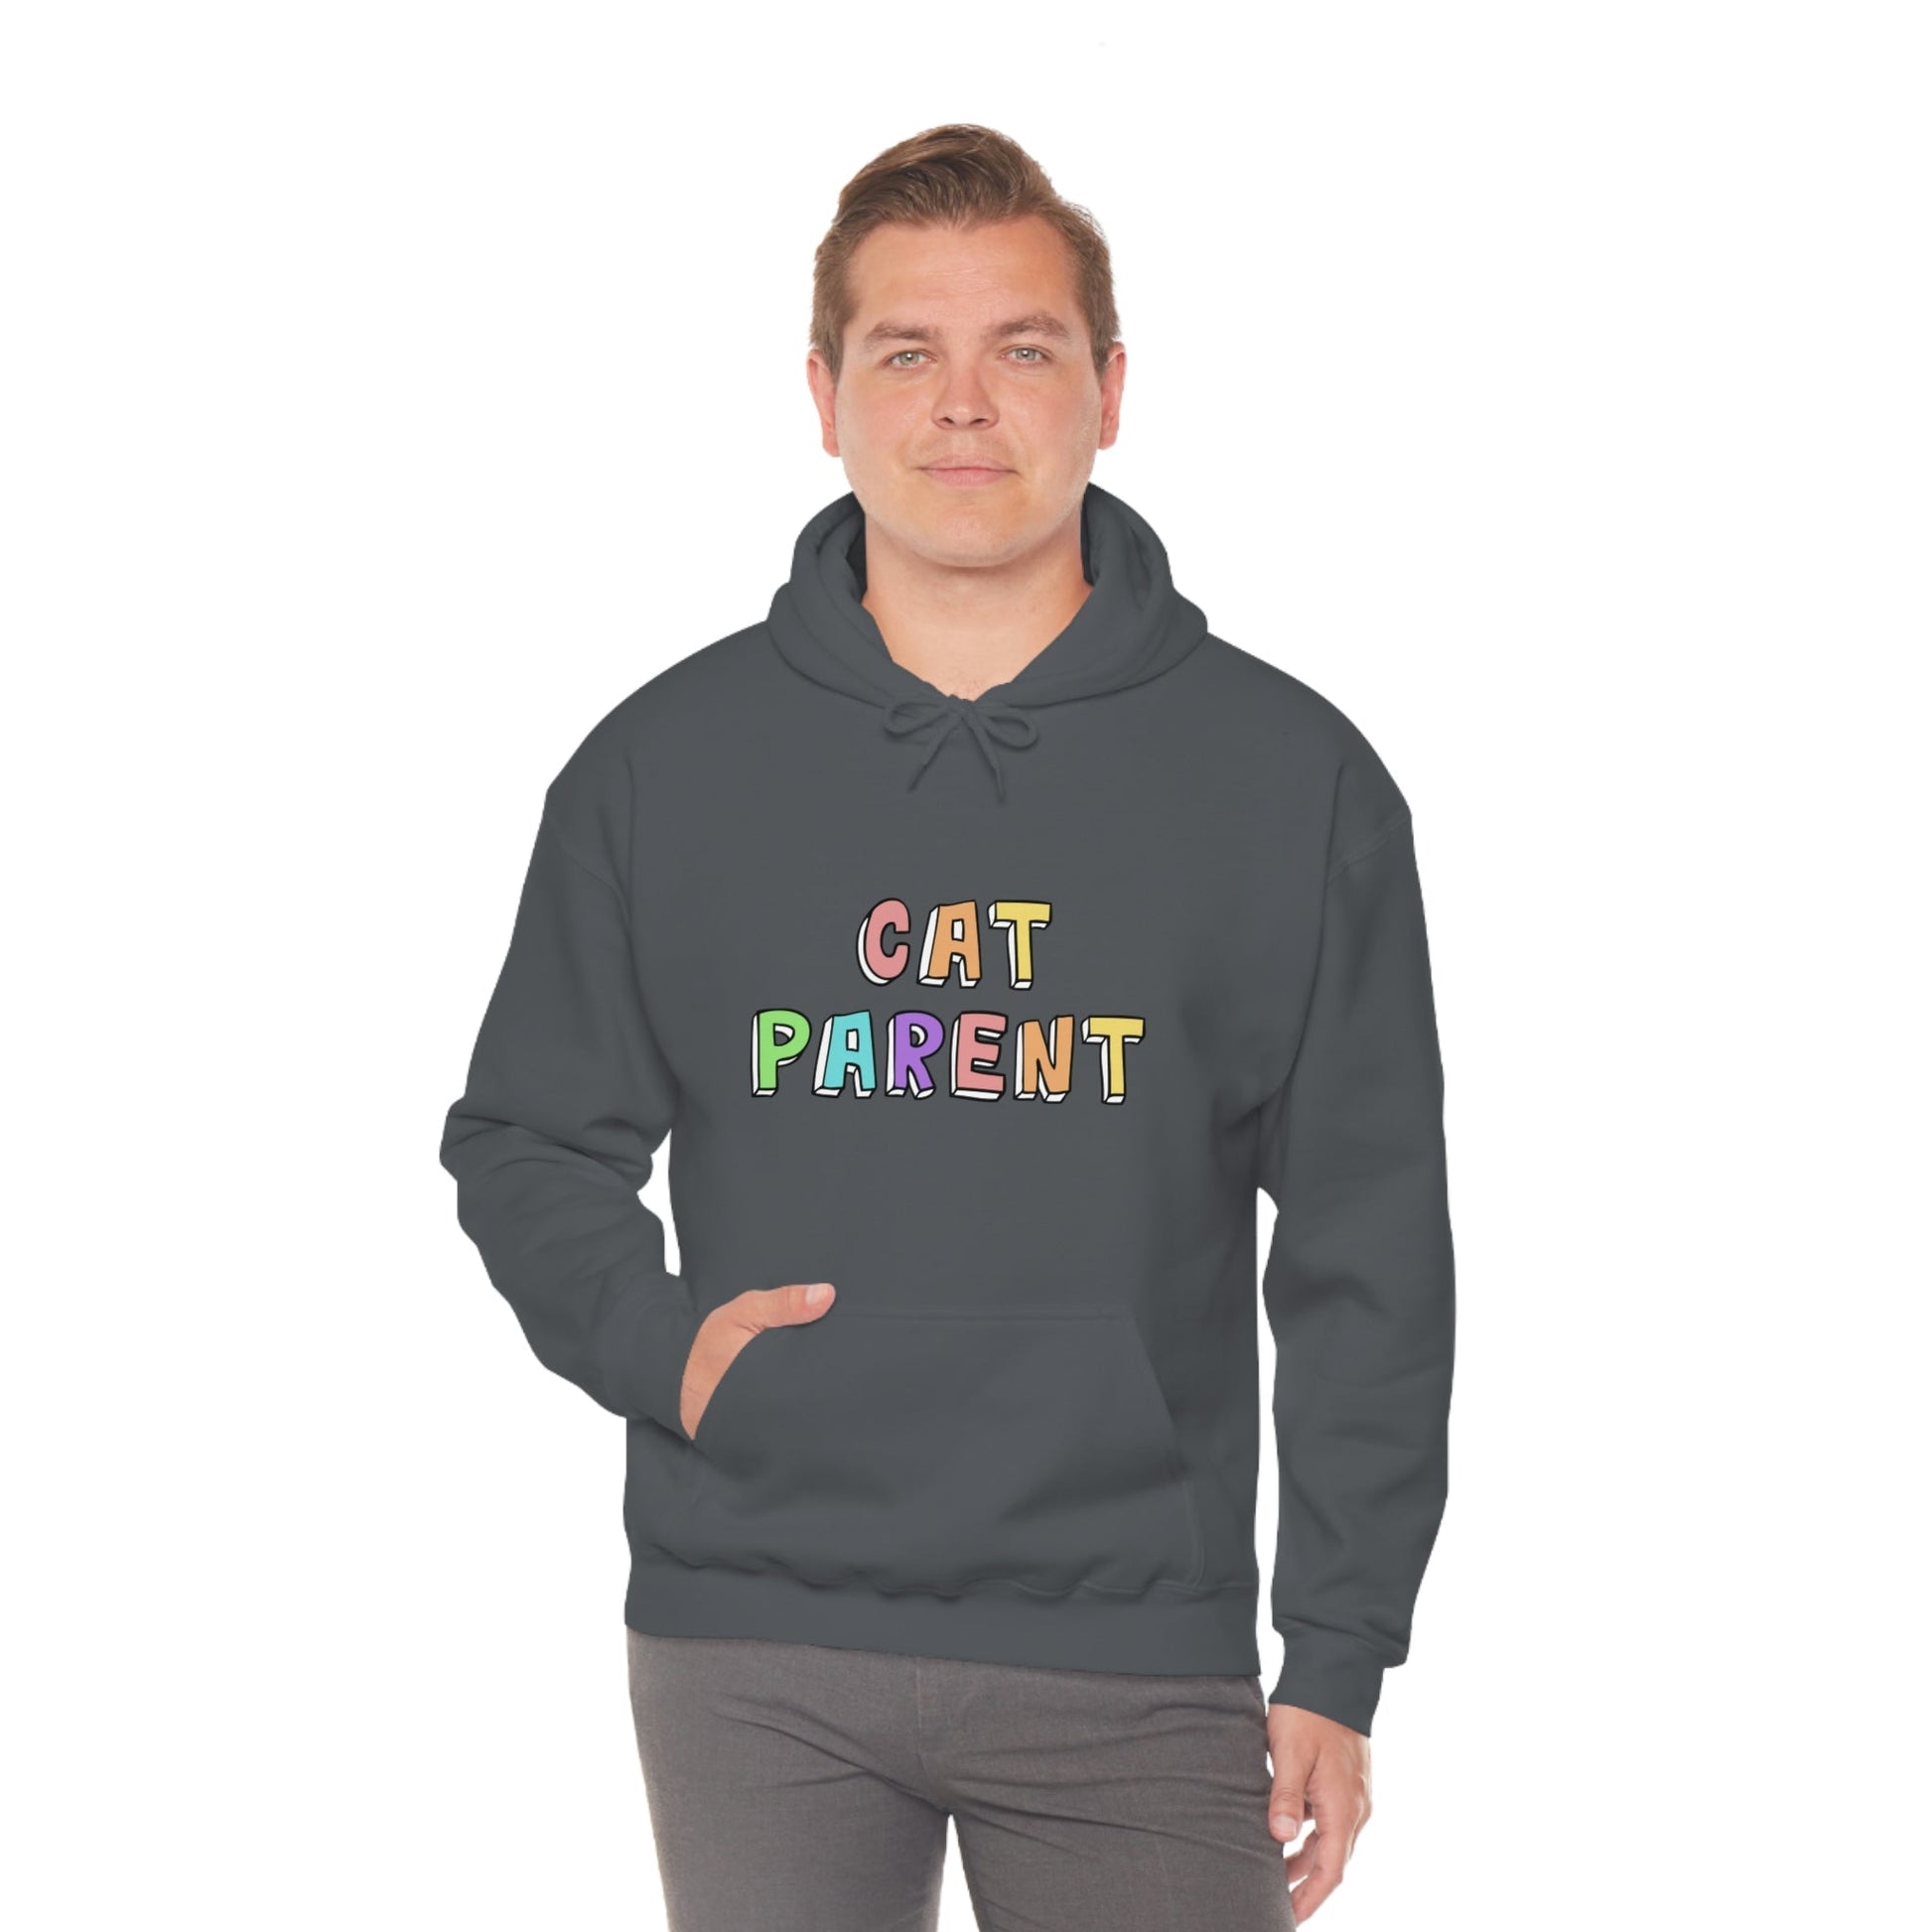 Cat Parent | Hooded Sweatshirt - Detezi Designs-47679122771466686565